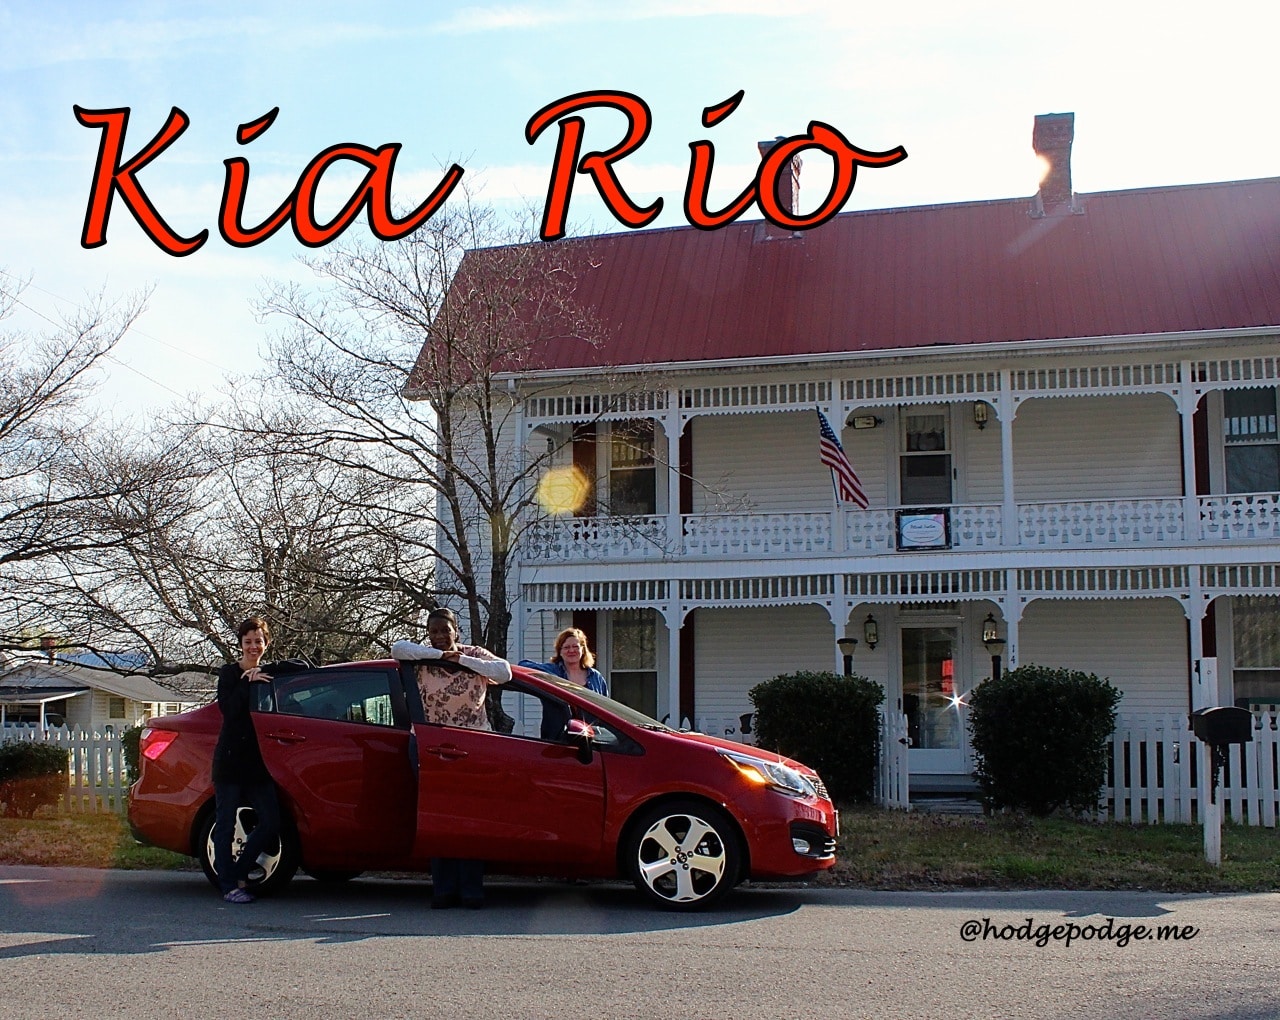 The Kia Rio Experience